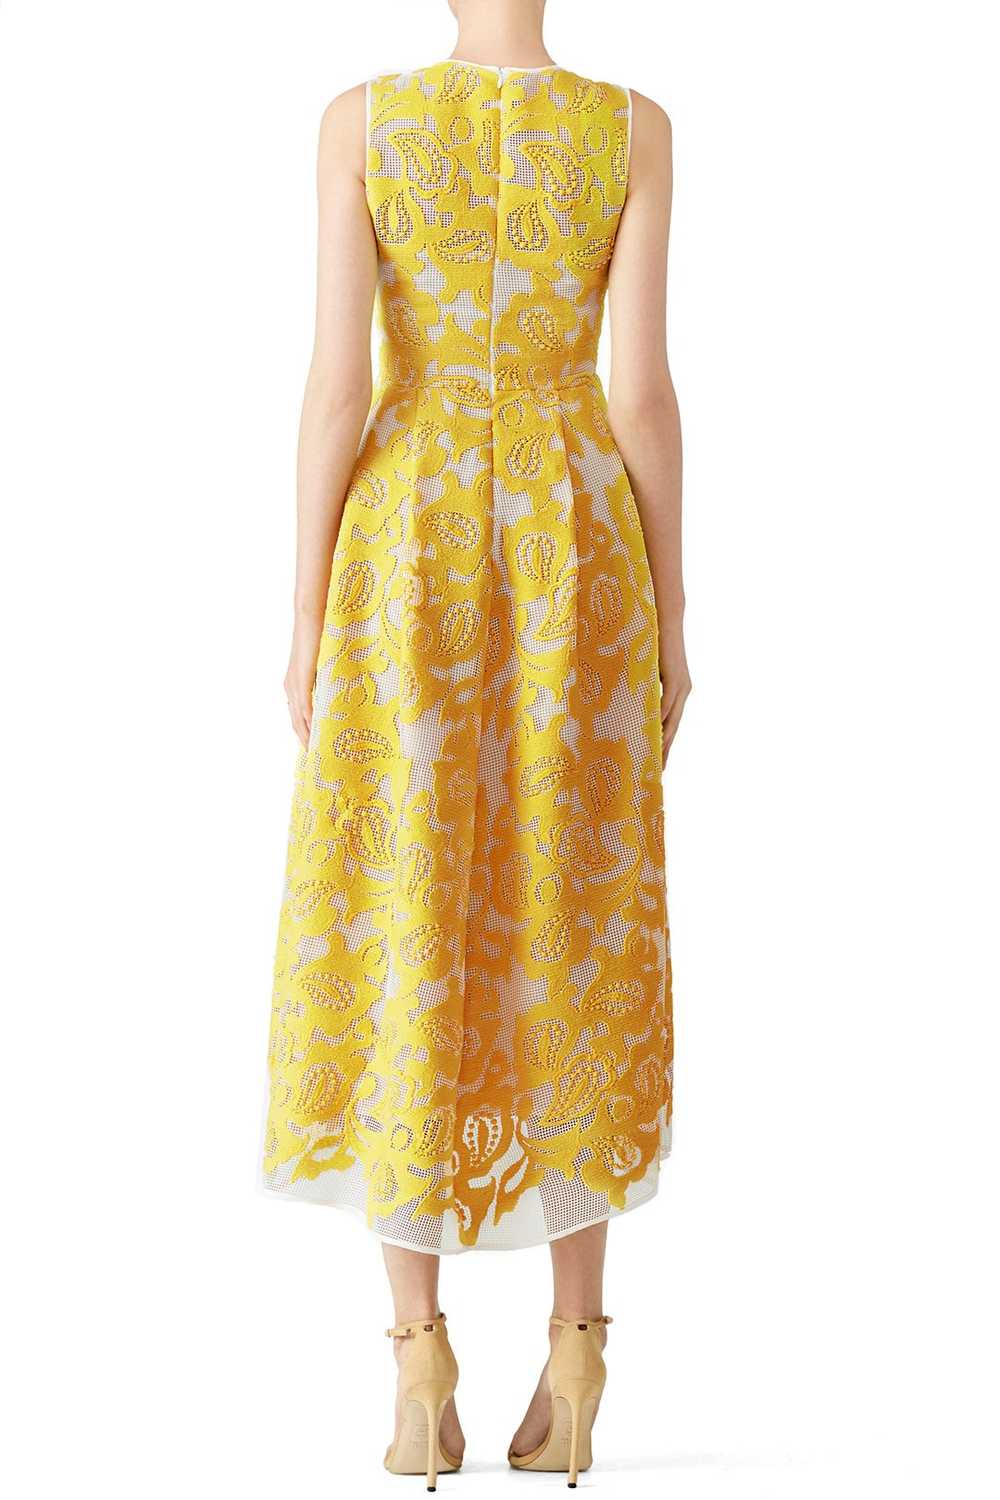 Hunter Bell Yellow Abstract Stitch Dress - image 2